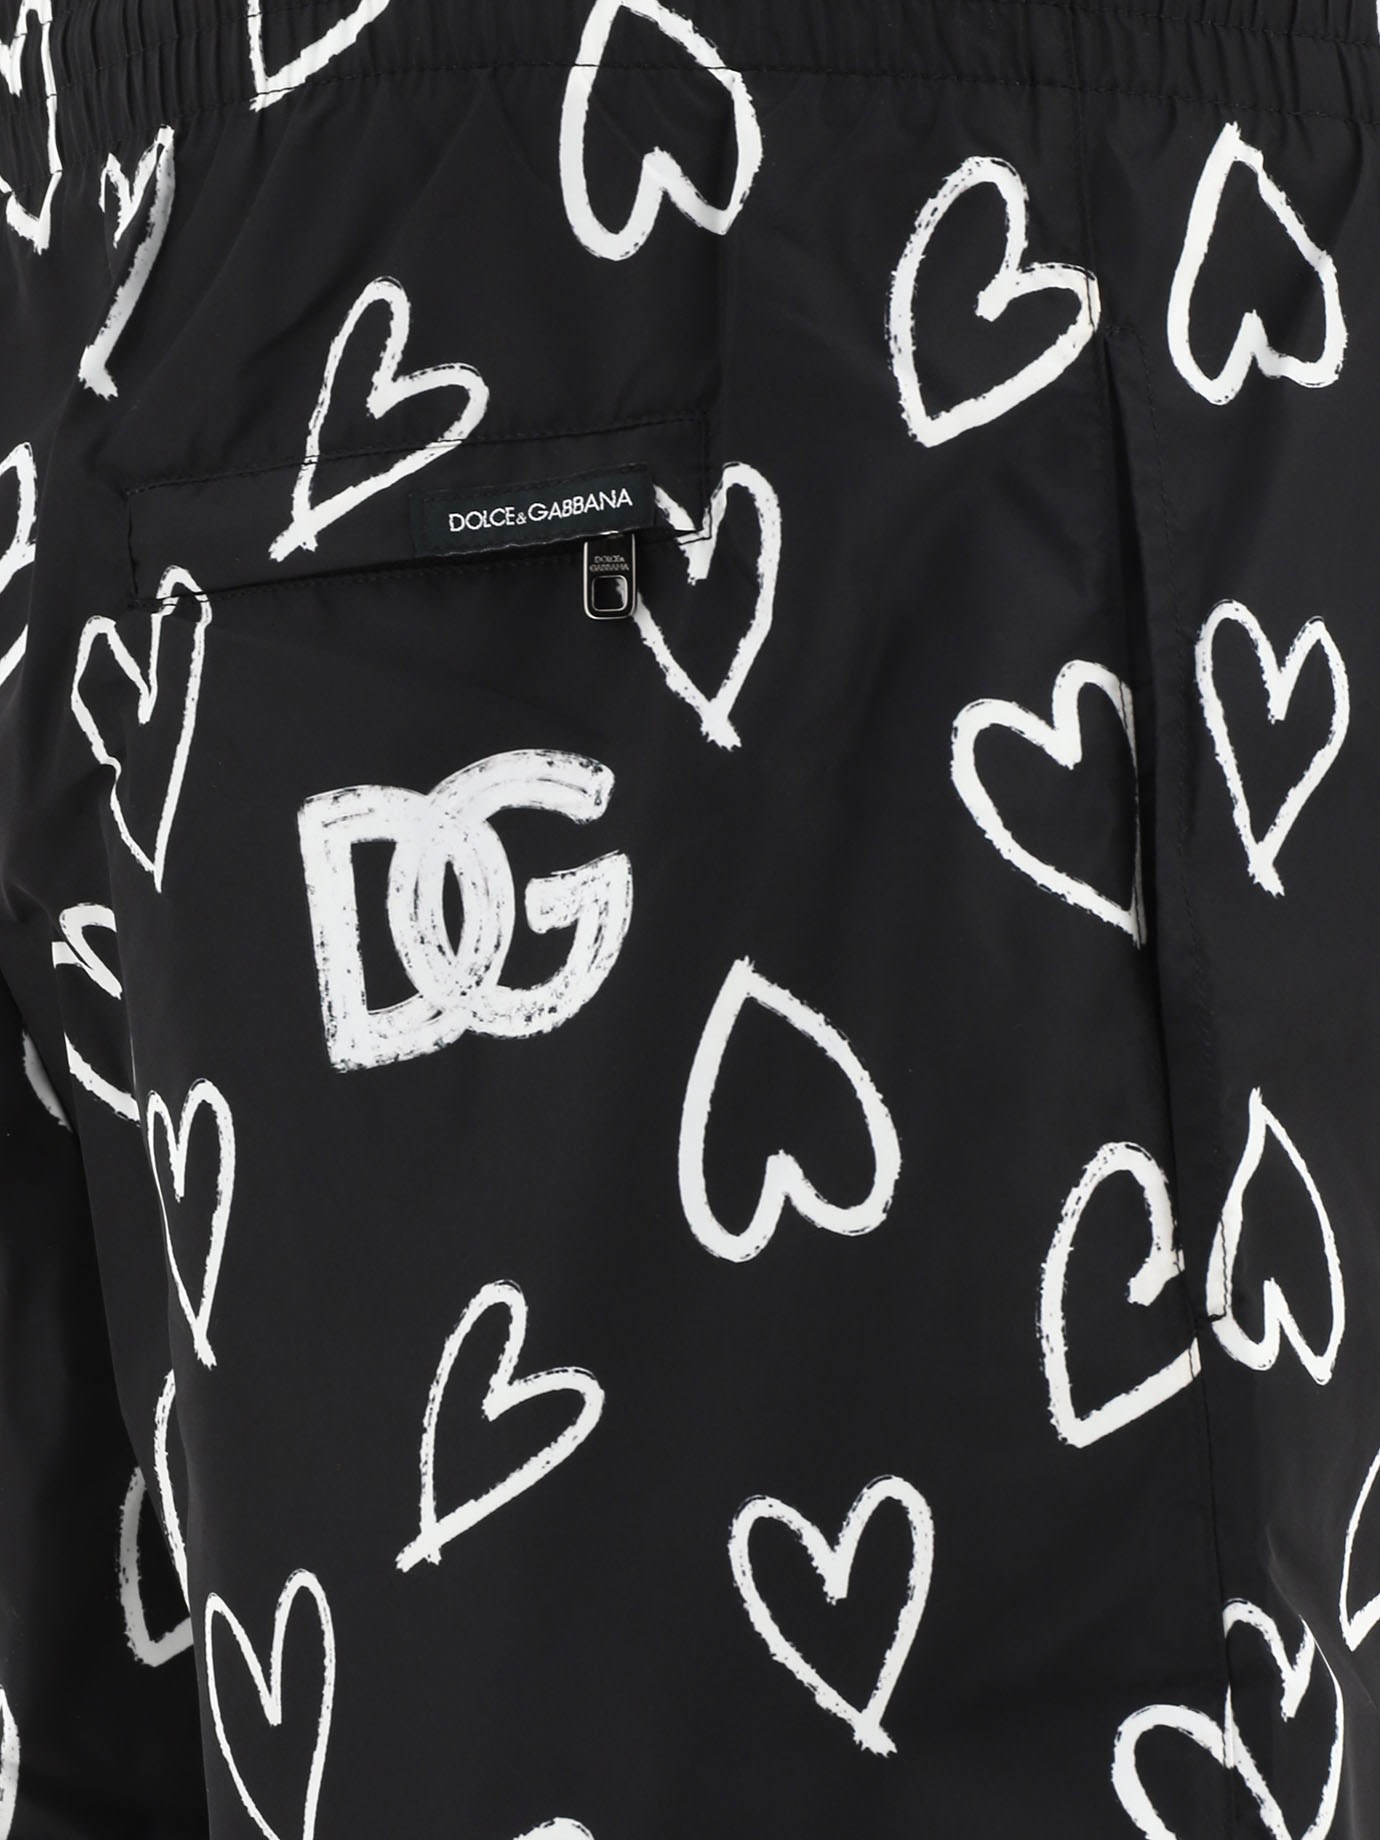 Costume  DG Hearts  by Dolce & Gabbana